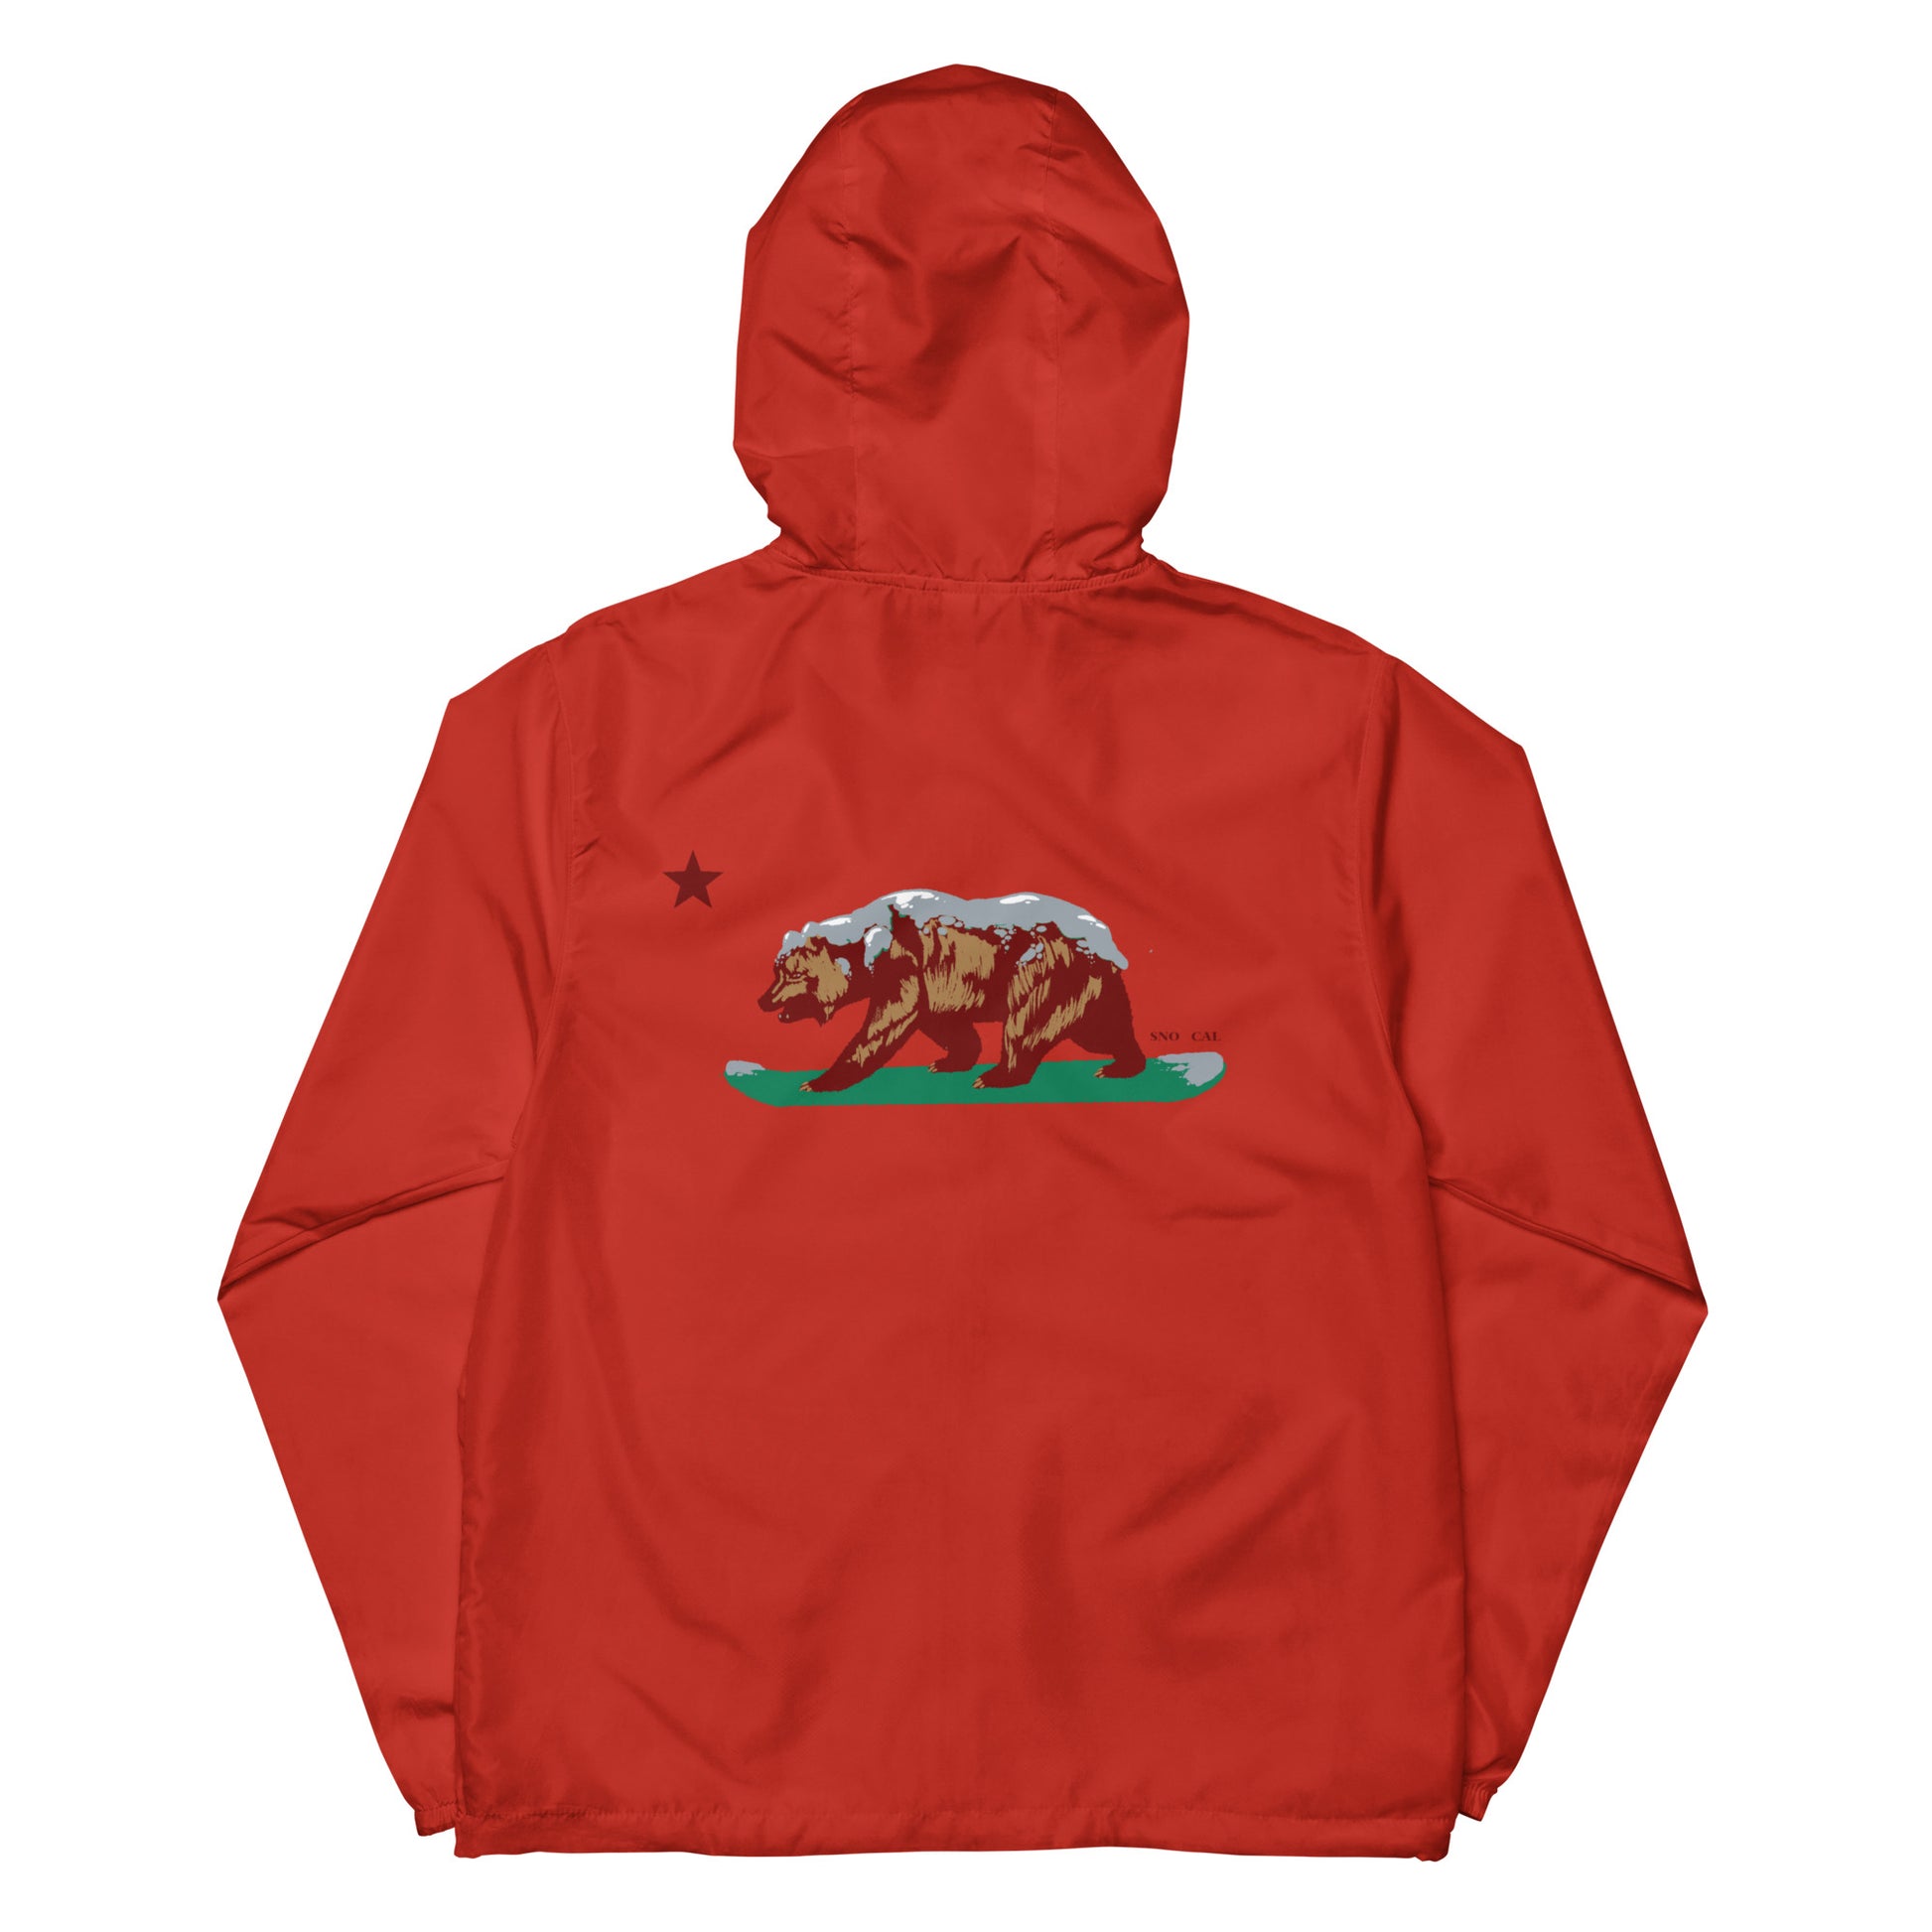 Red California grizzly windbreaker hoodie